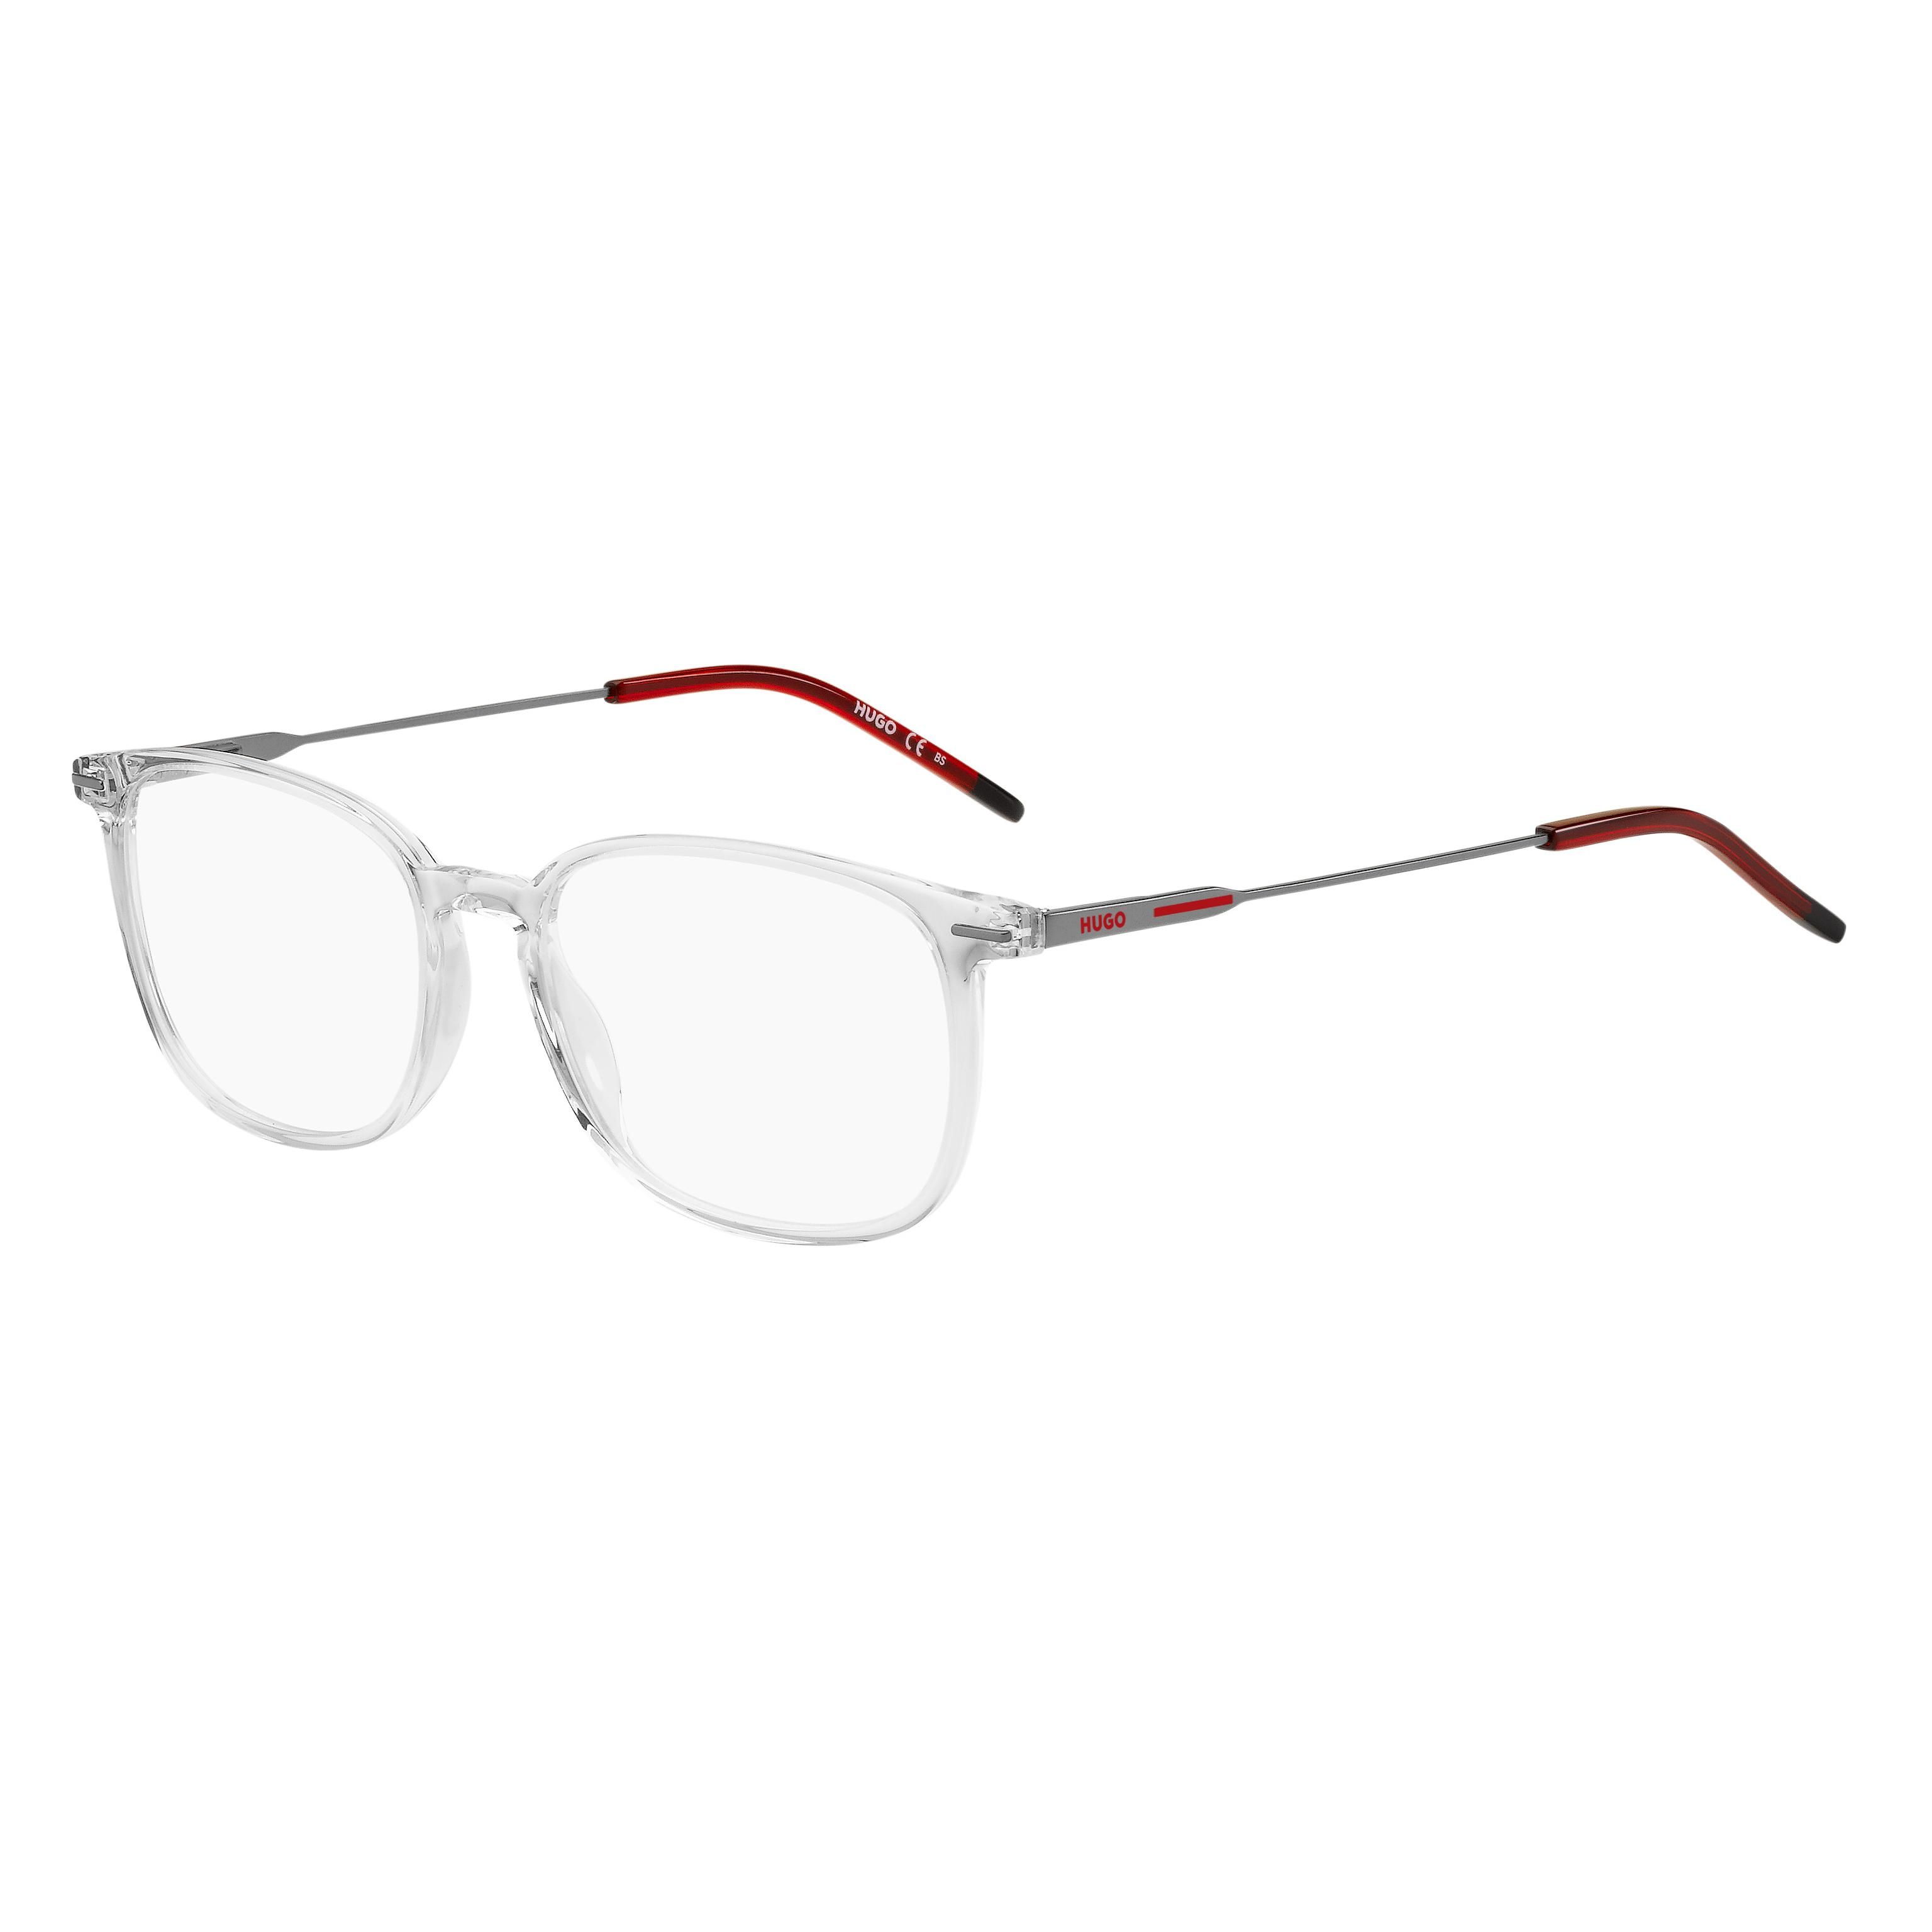 HG 1205 Pillow Eyeglasses 900 - size 52